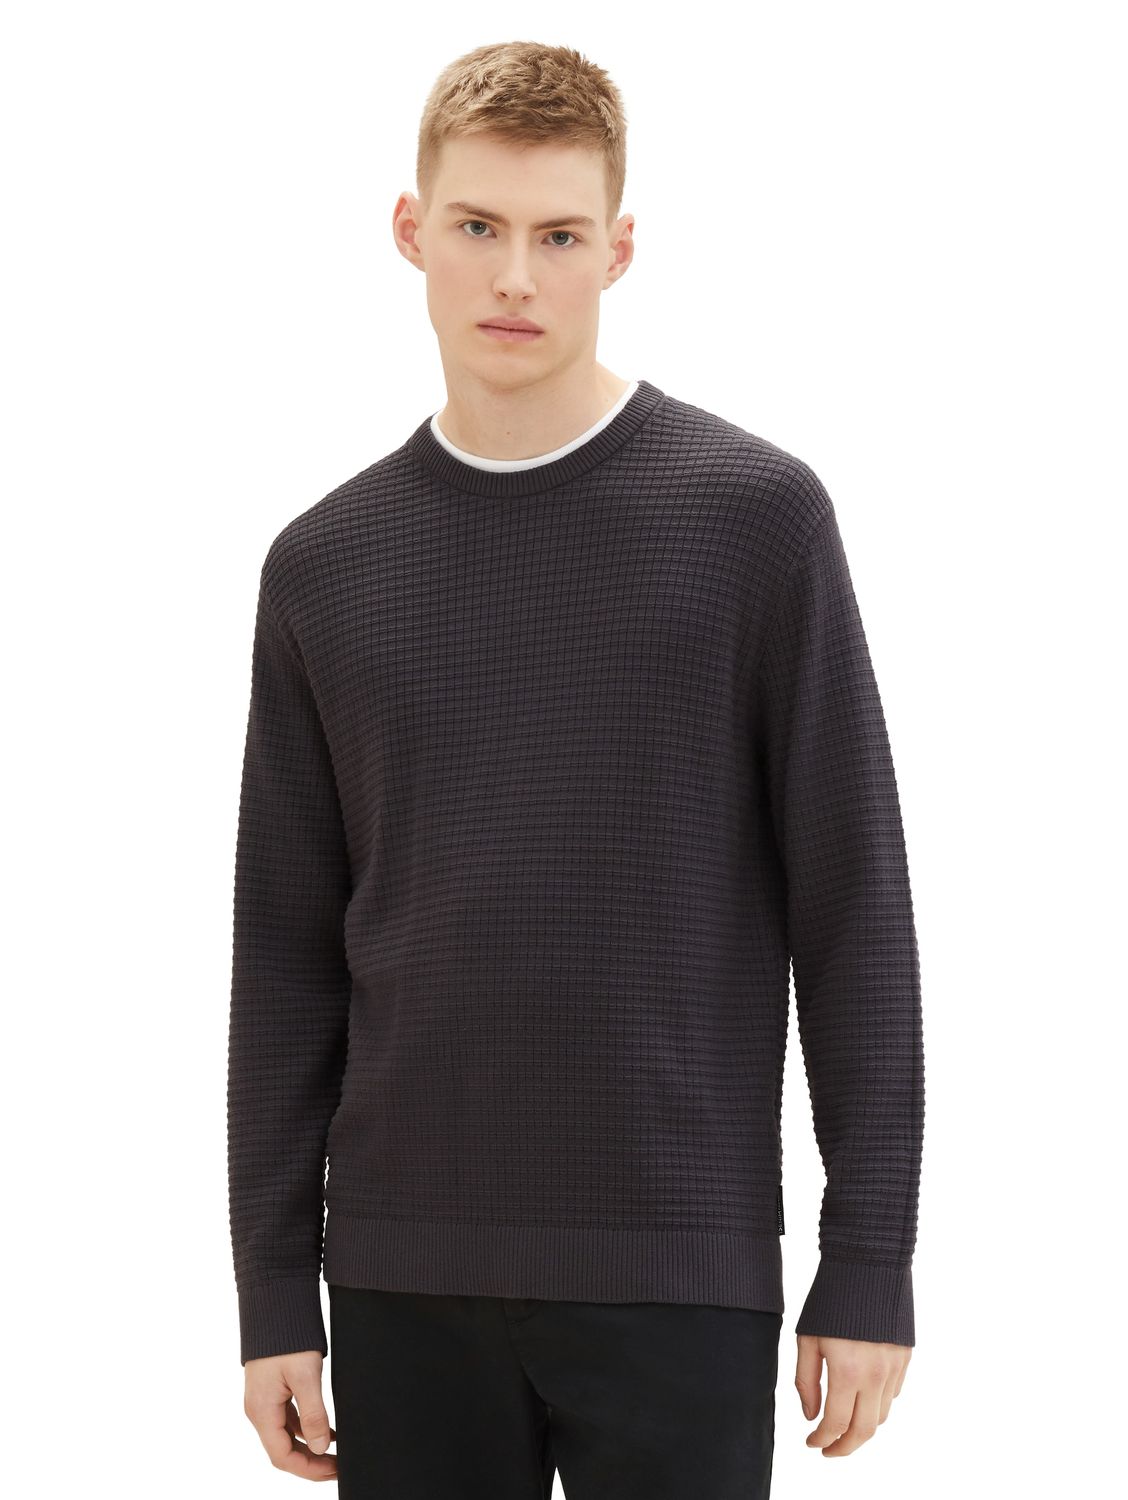 Пуловер TOM TAILOR Denim STRUCTURED DOUBLELAYER, серый толстовка tom tailor размер l серый